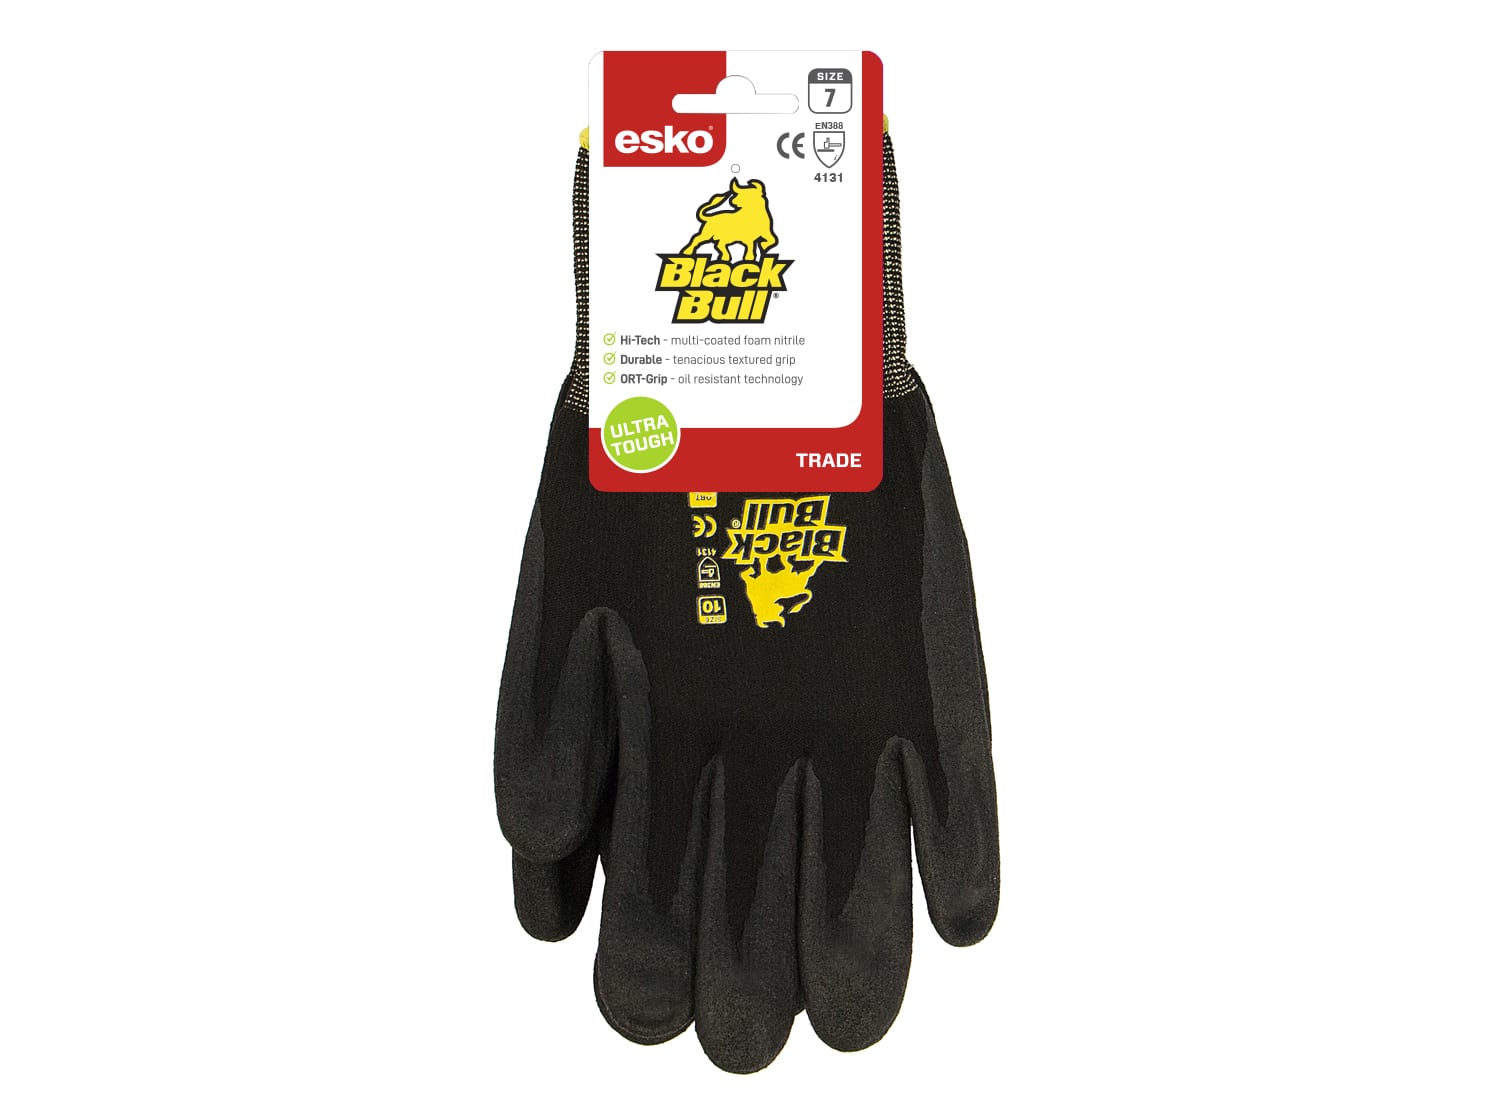 Esko Black Bull Nitrile Glove Header Carded - Size 11(2XL) E450